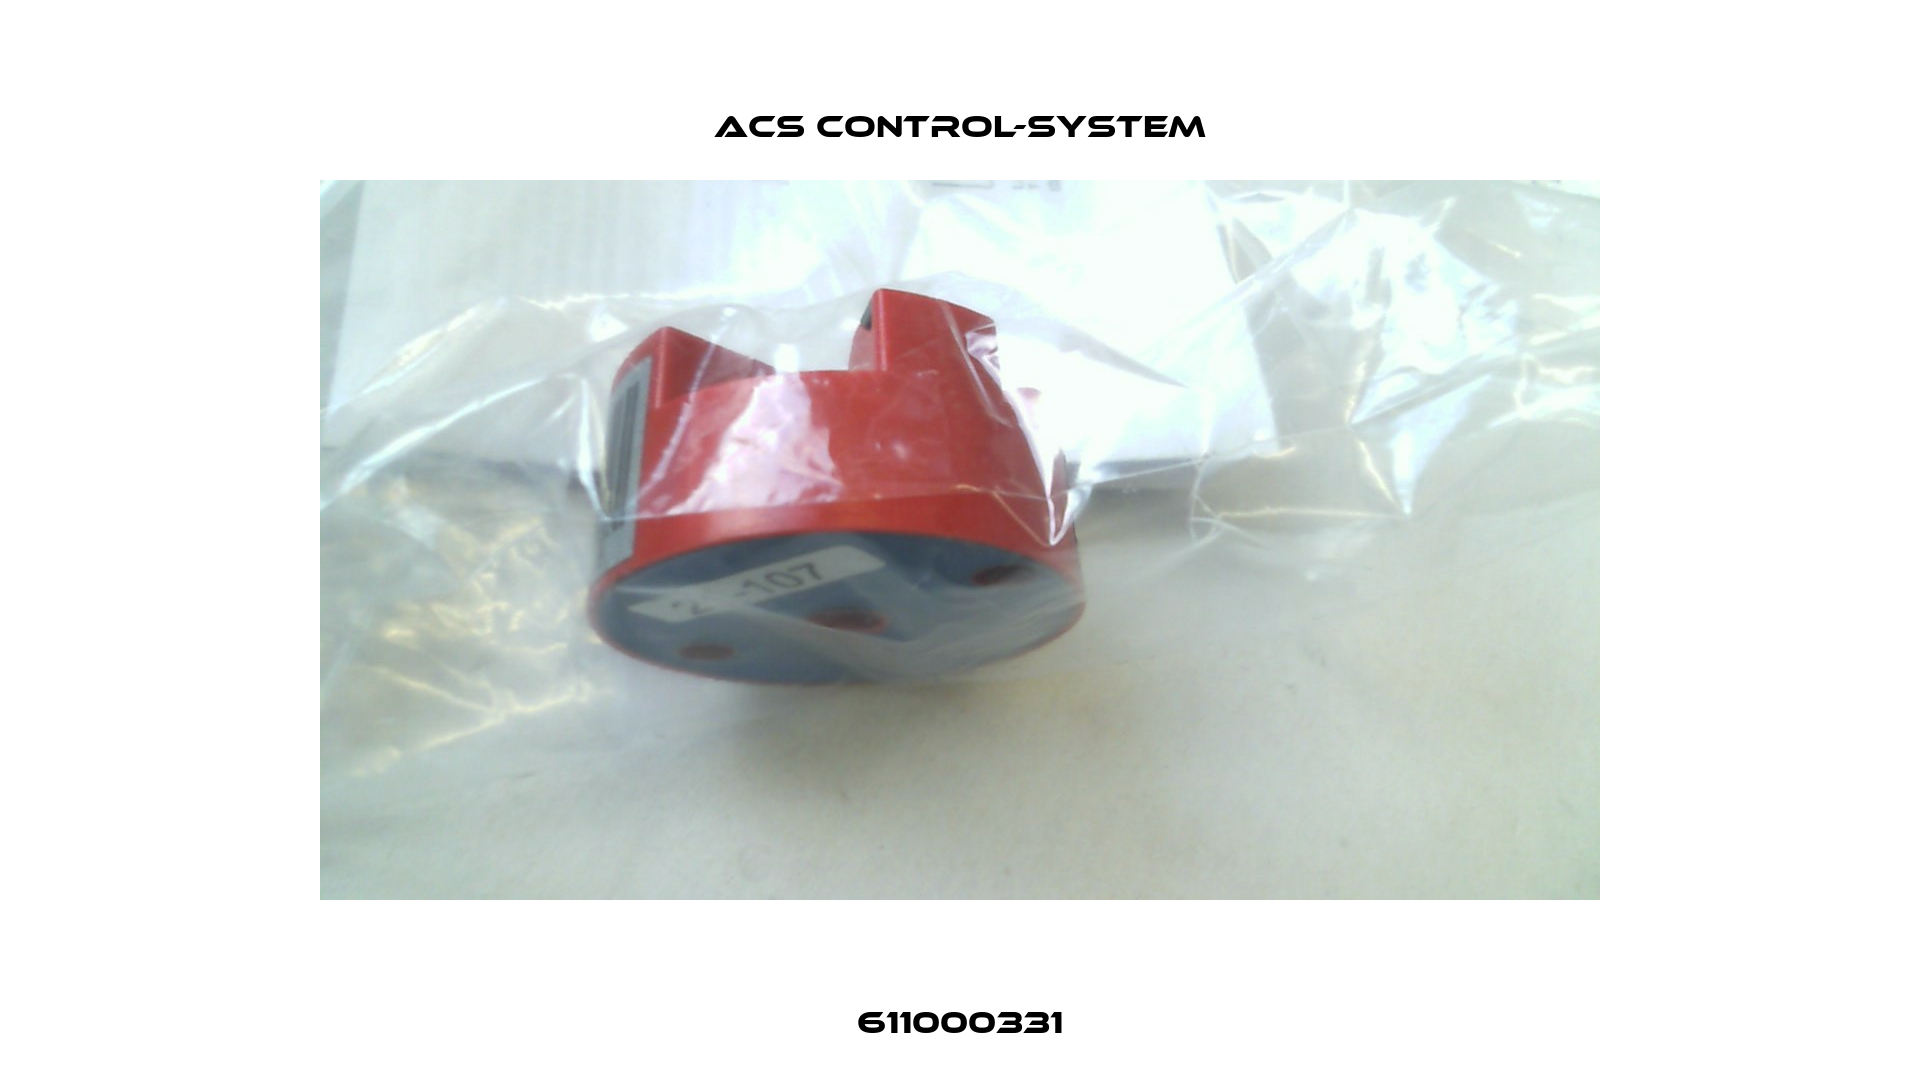 611000331 Acs Control-System